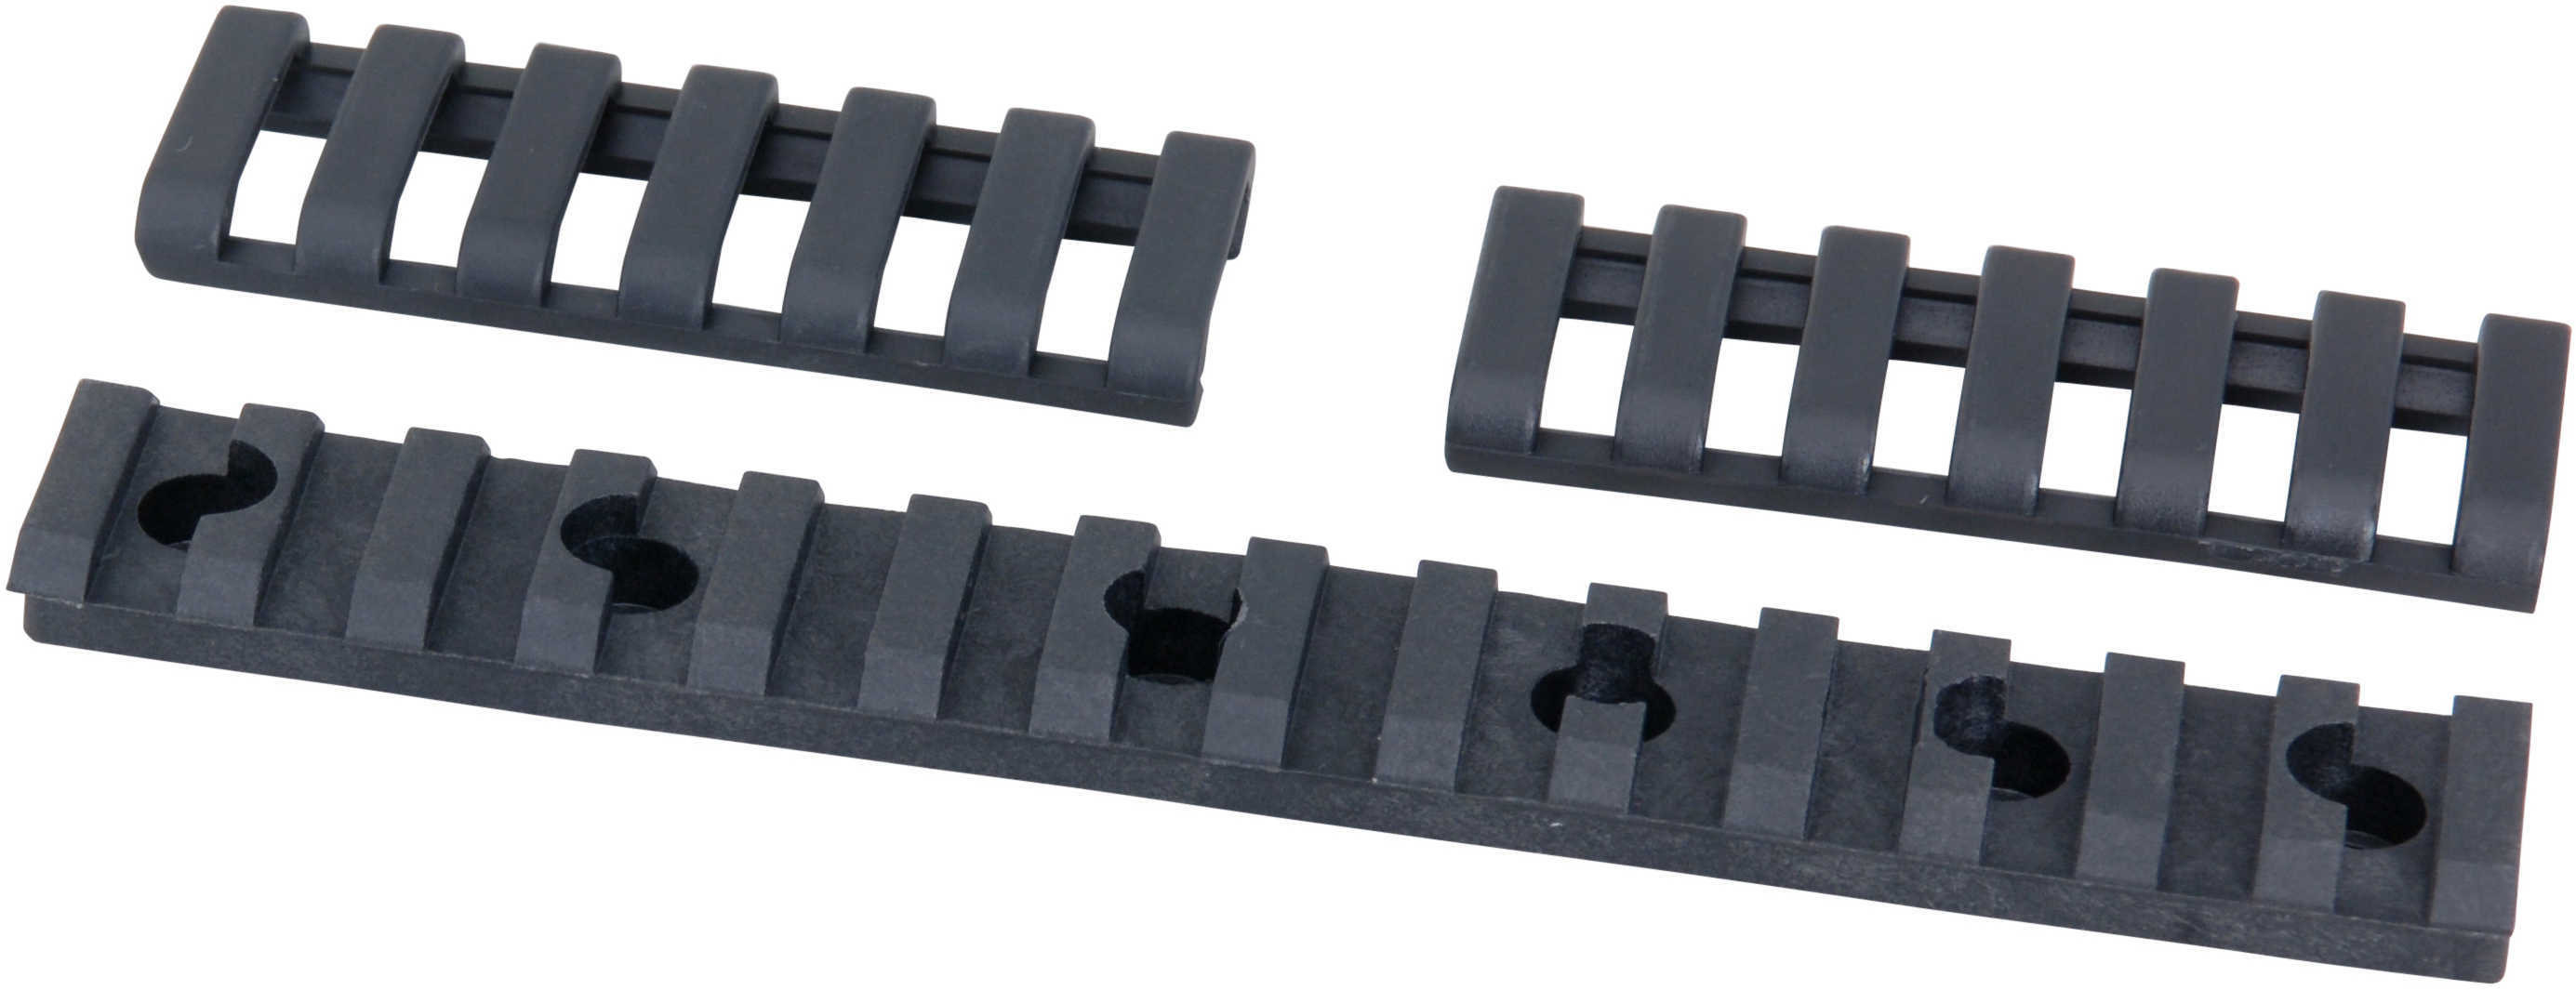 Ergo Grip Polymer Rail 6 Mounting Holes 14-slot with Hardware Black 4756-6